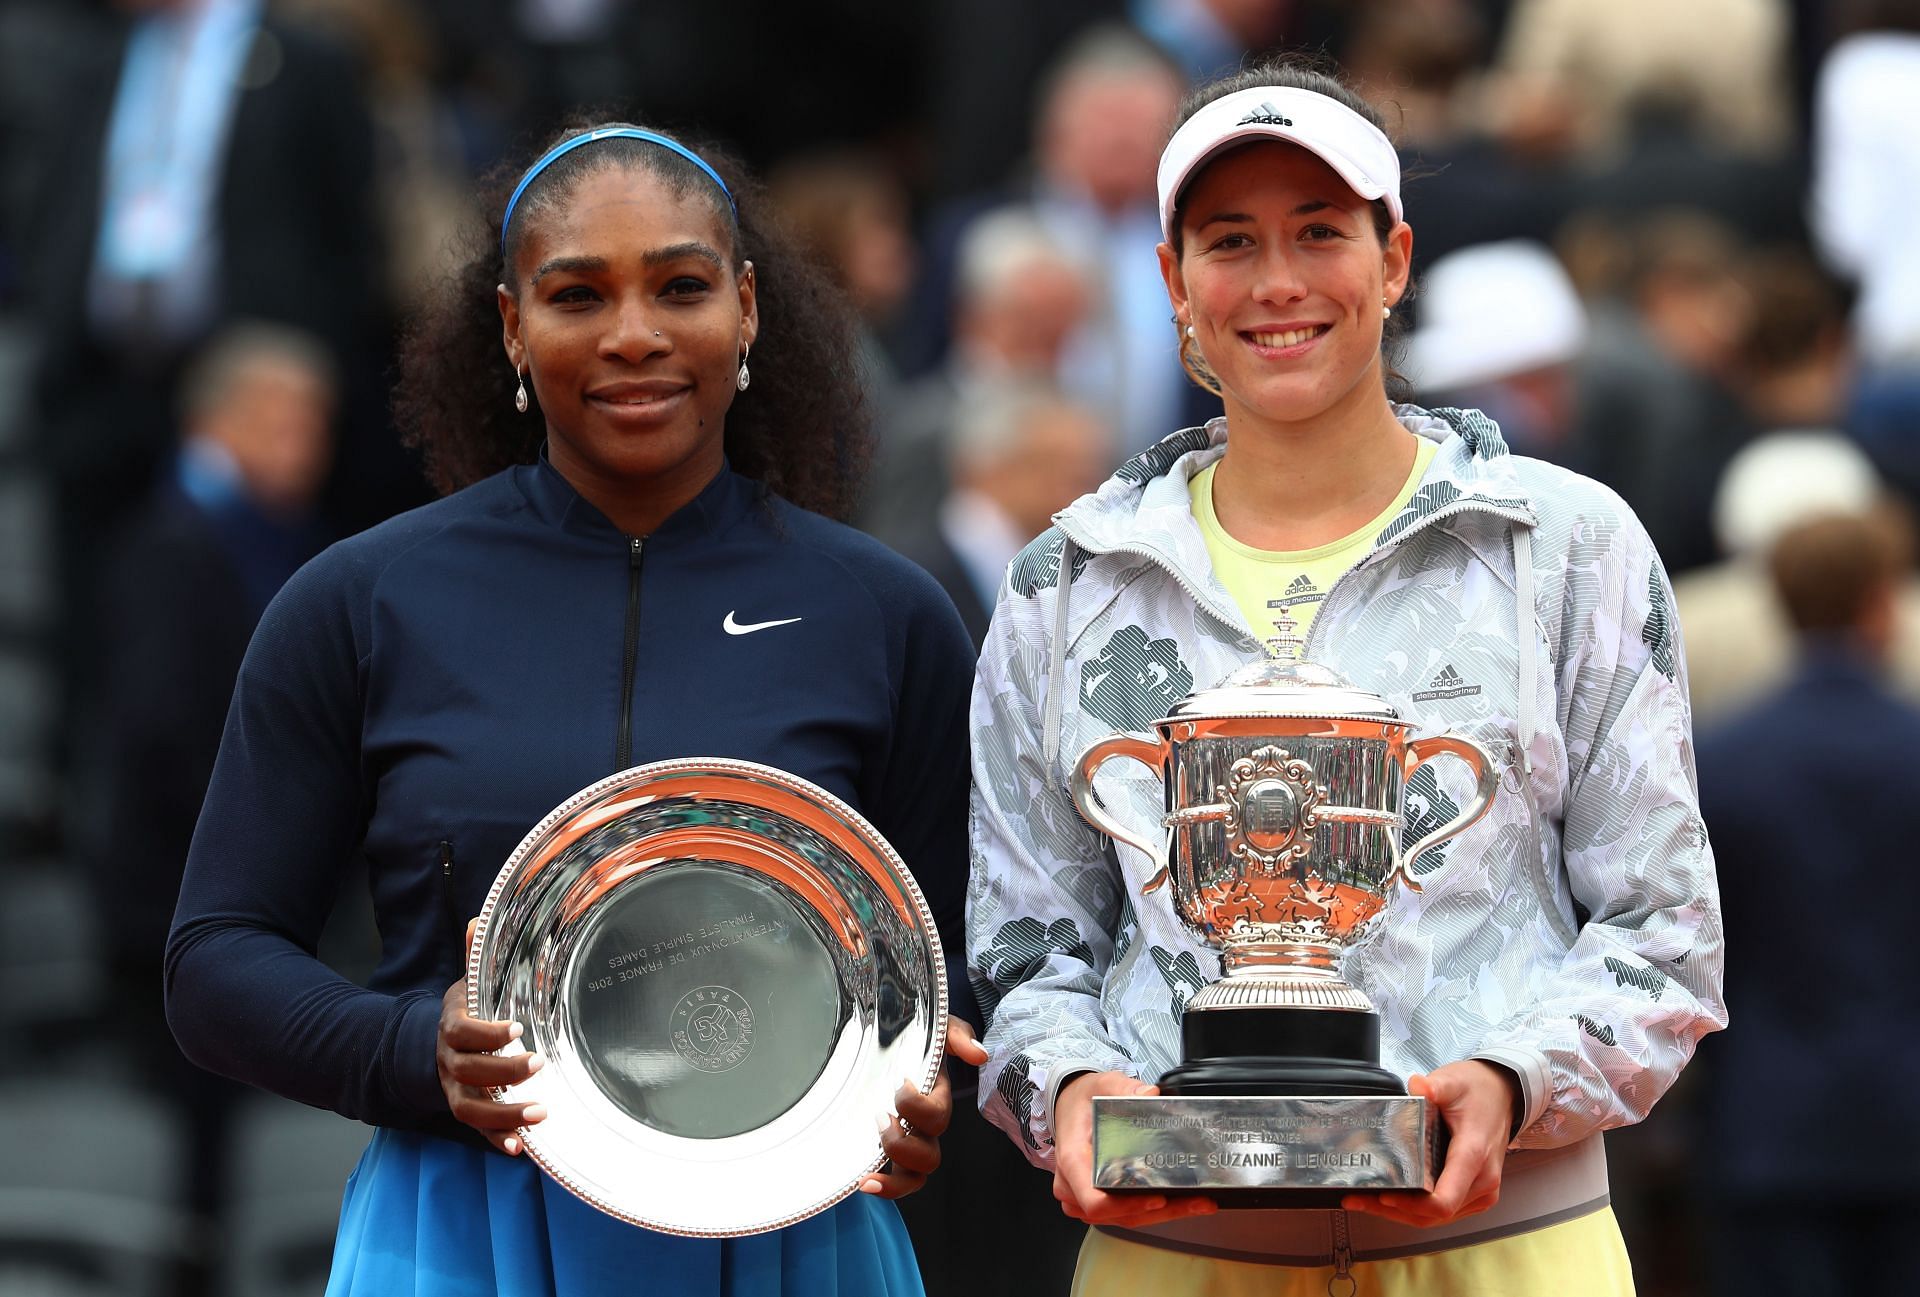 Serena Williams and Garbine Muguruza at the 2016 French Open.